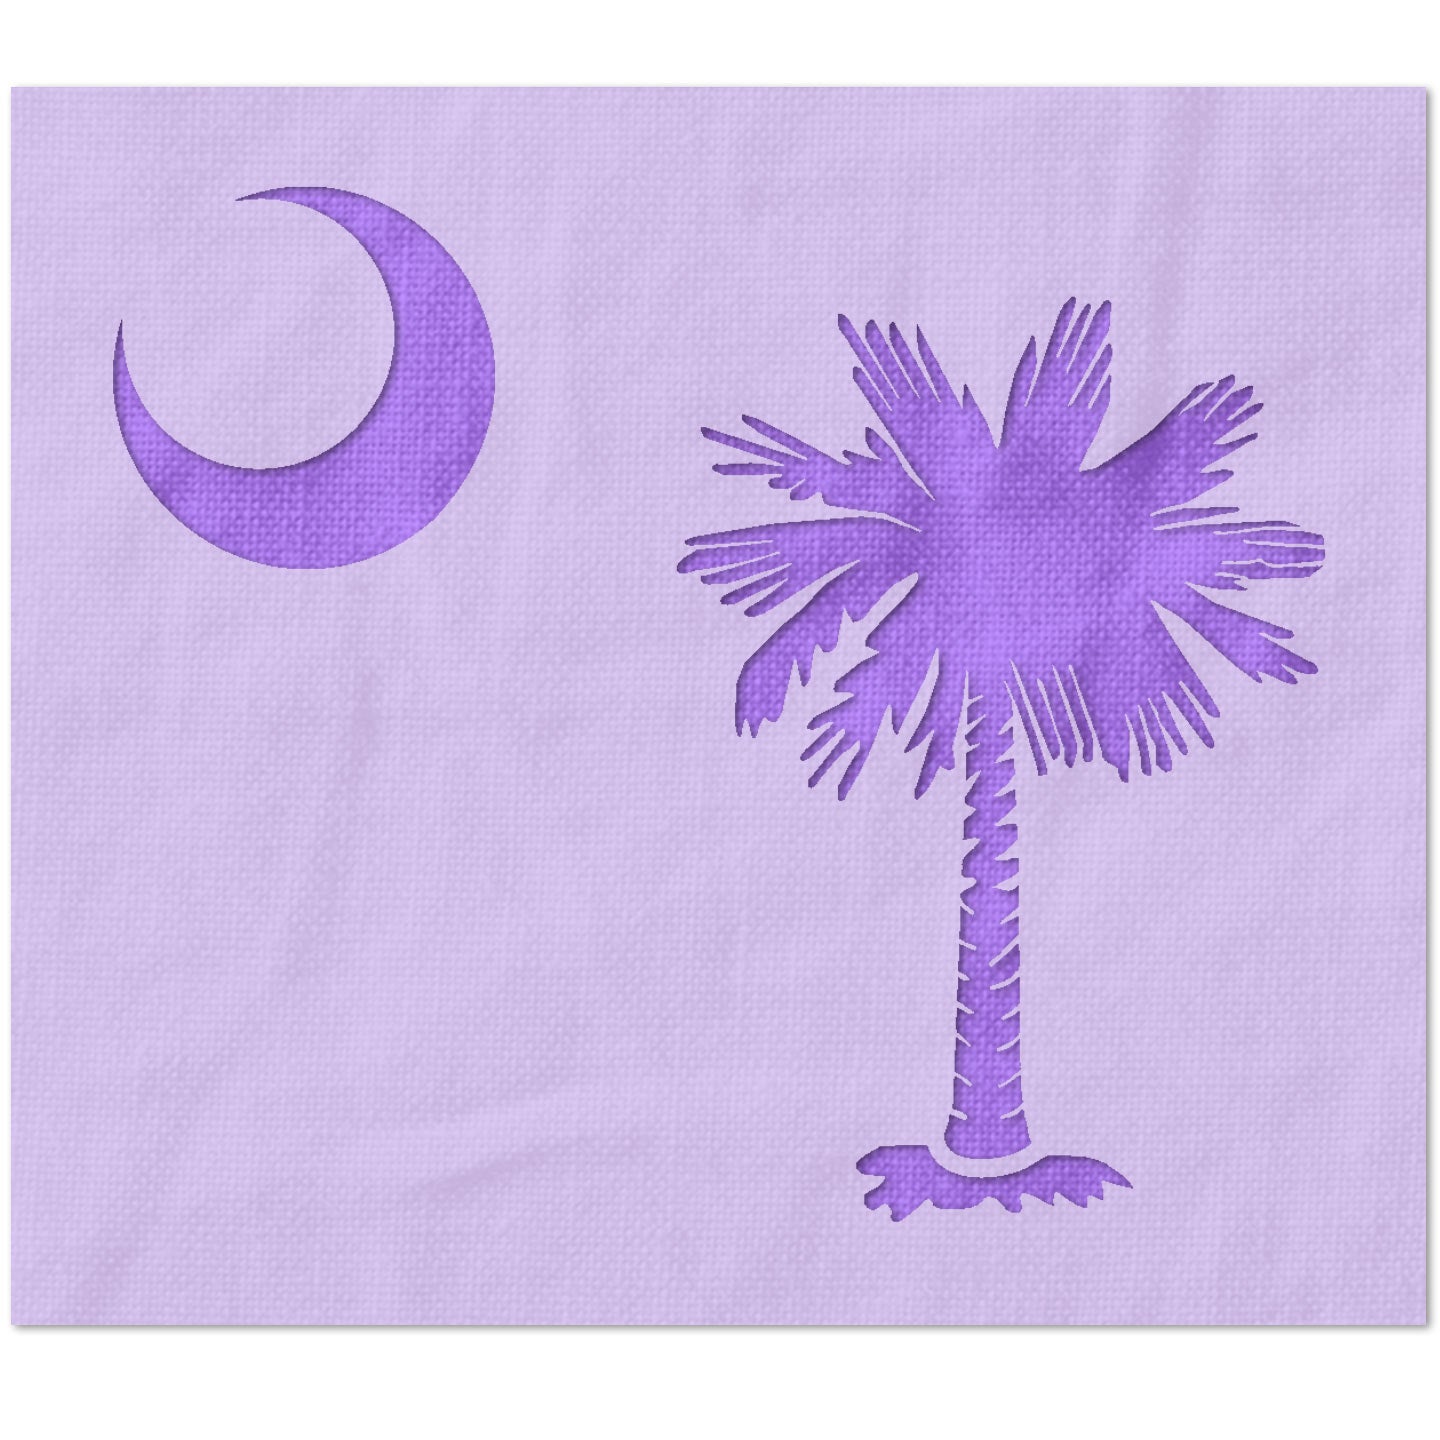 Palmetto Tree and Moon Stencil / South Carolina State Flag Stencil (Detailed)